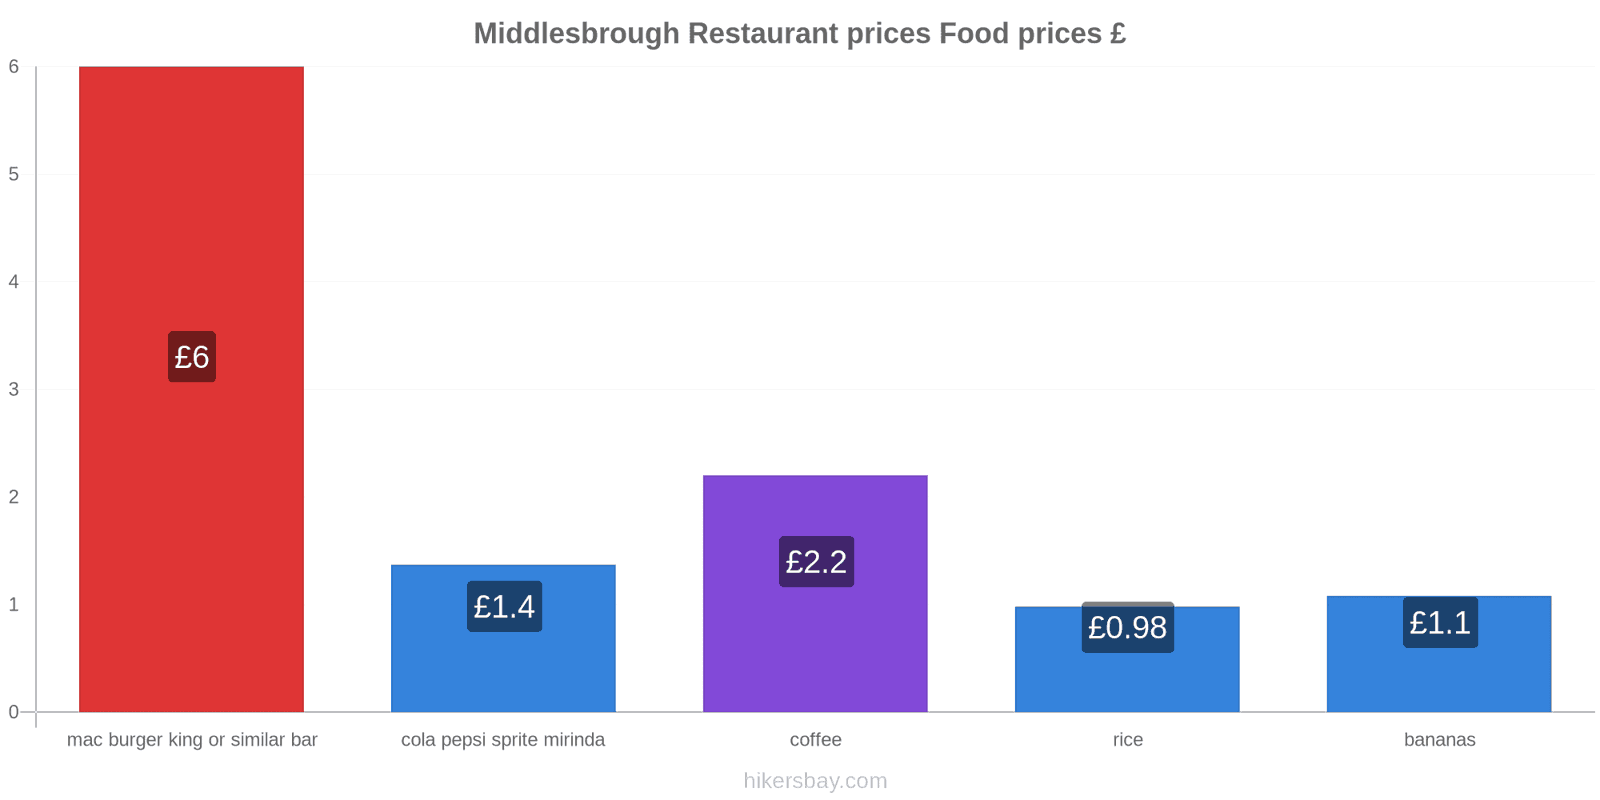 Middlesbrough price changes hikersbay.com